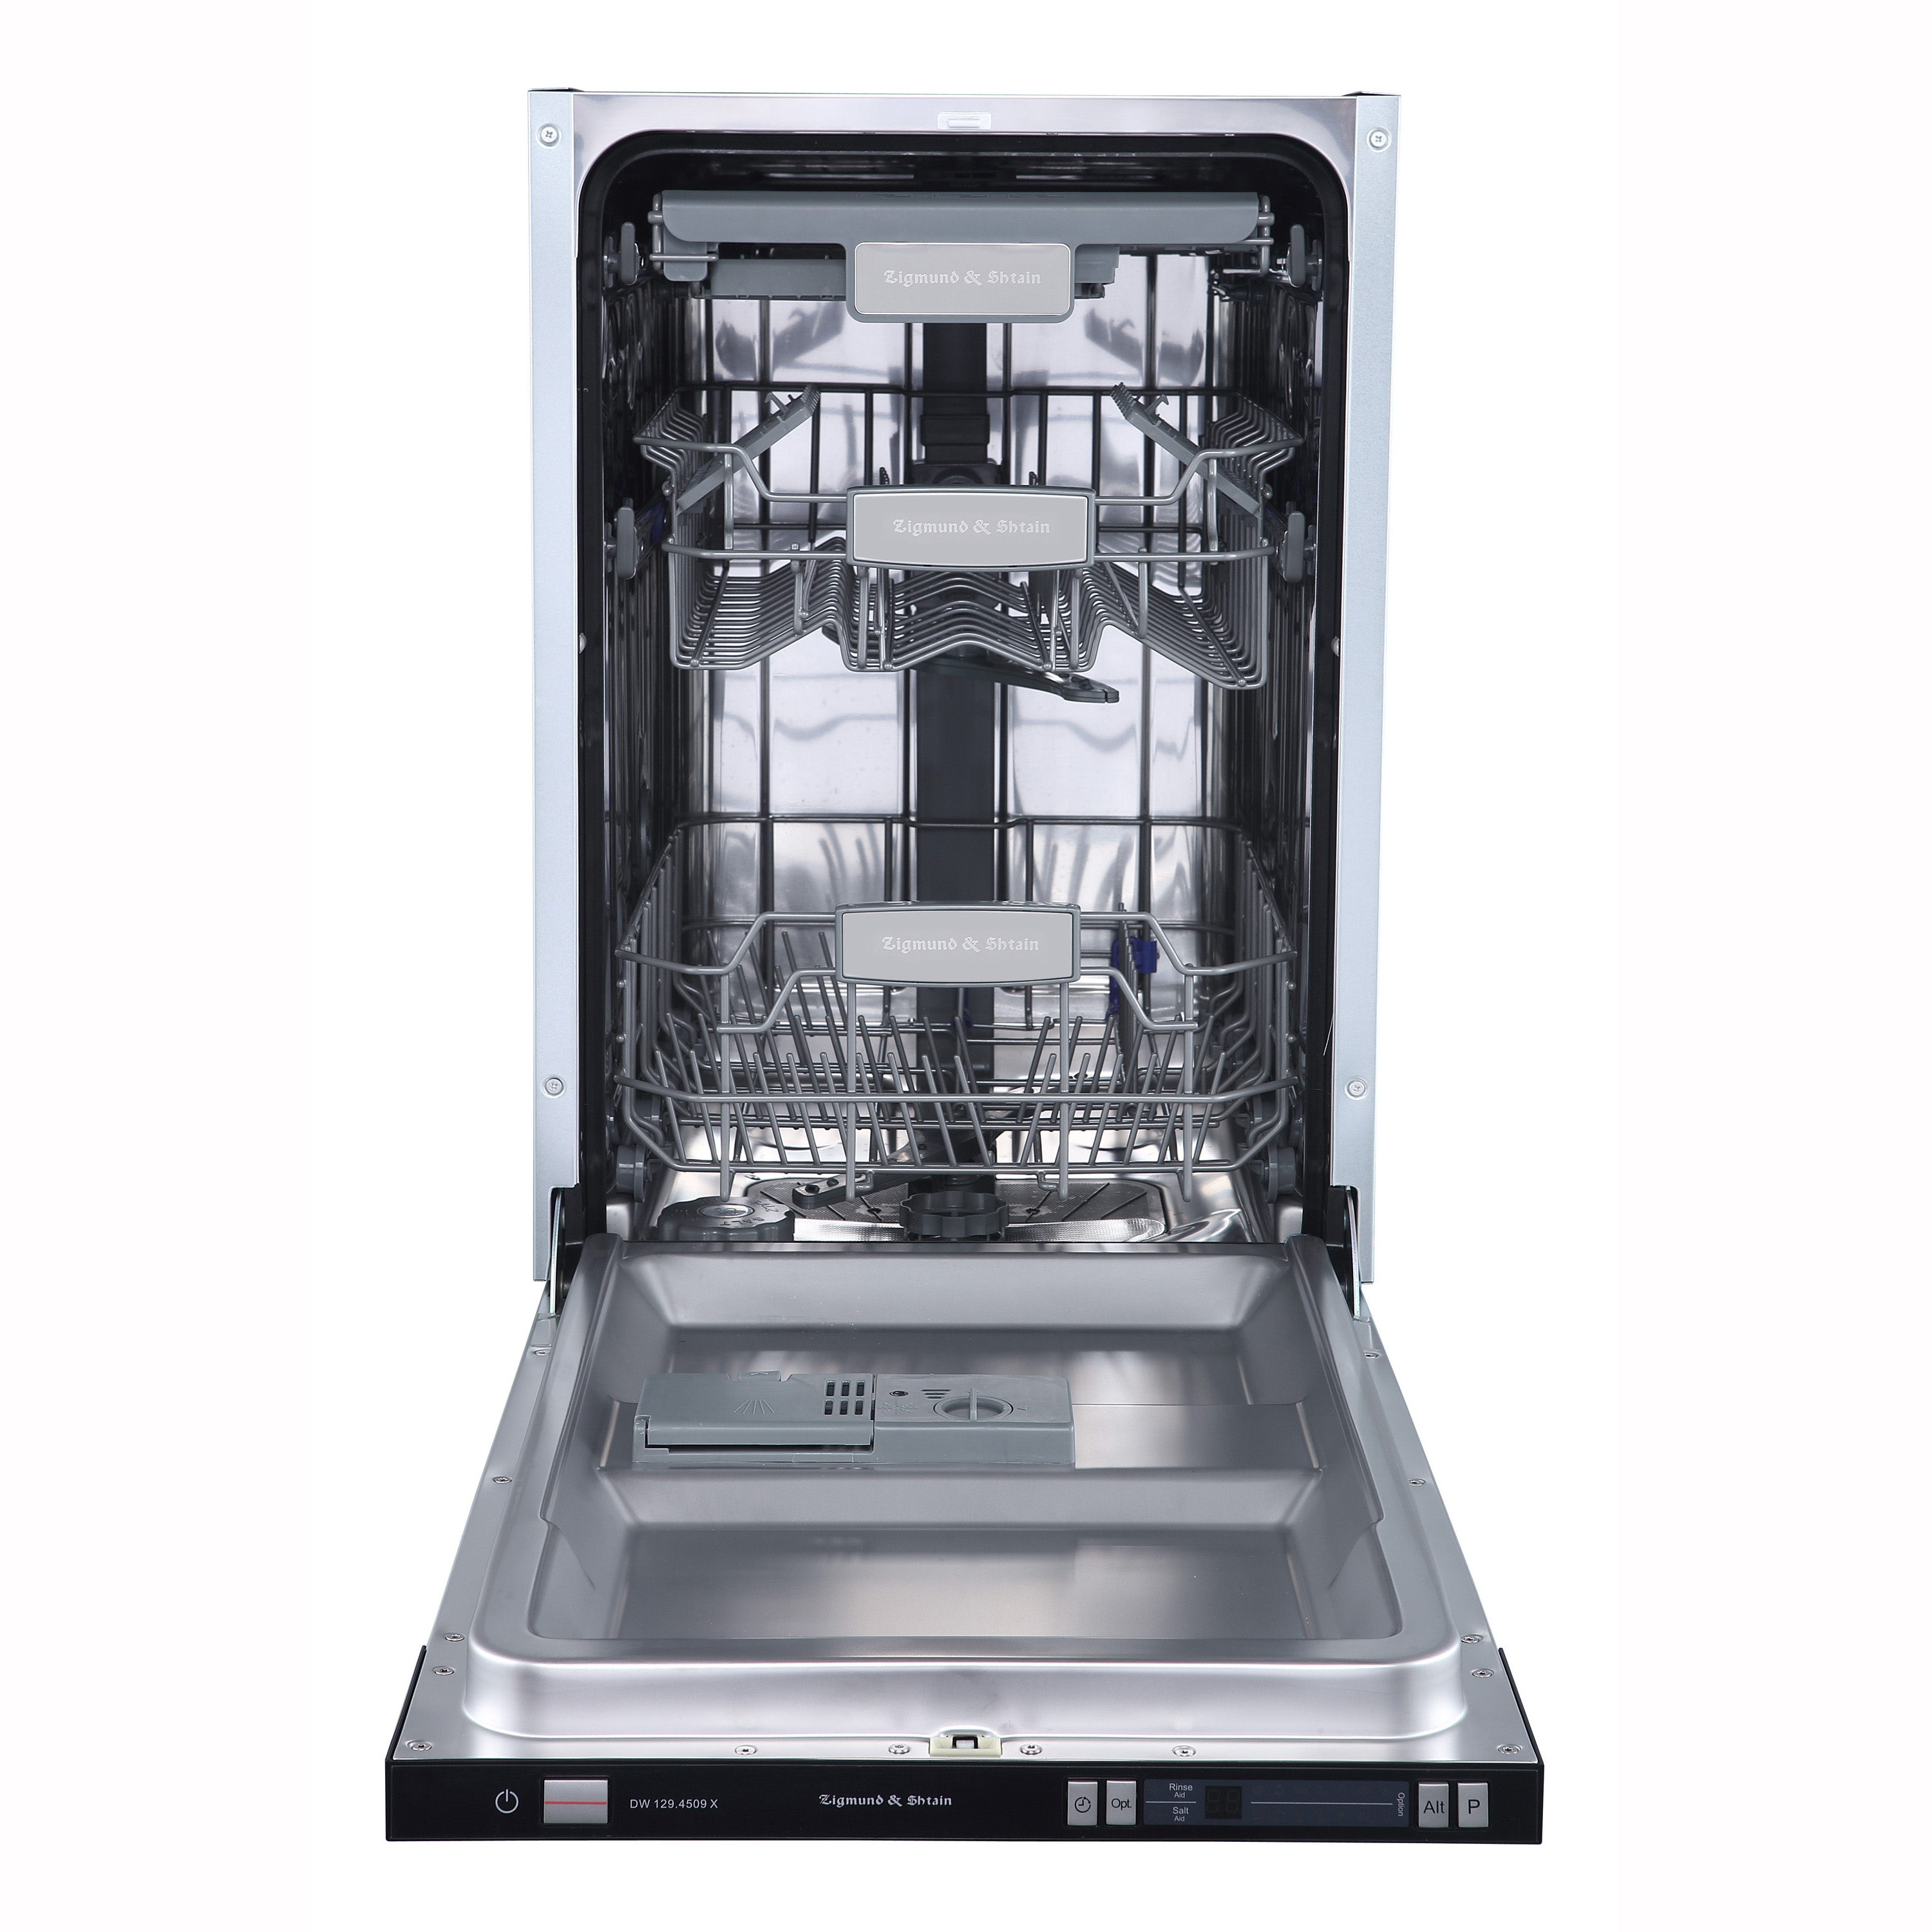 Встраиваемая посудомоечная машина Zigmund & Shtain DW 129.4509 X встраиваемая посудомоечная машина miele g 5481 scvi